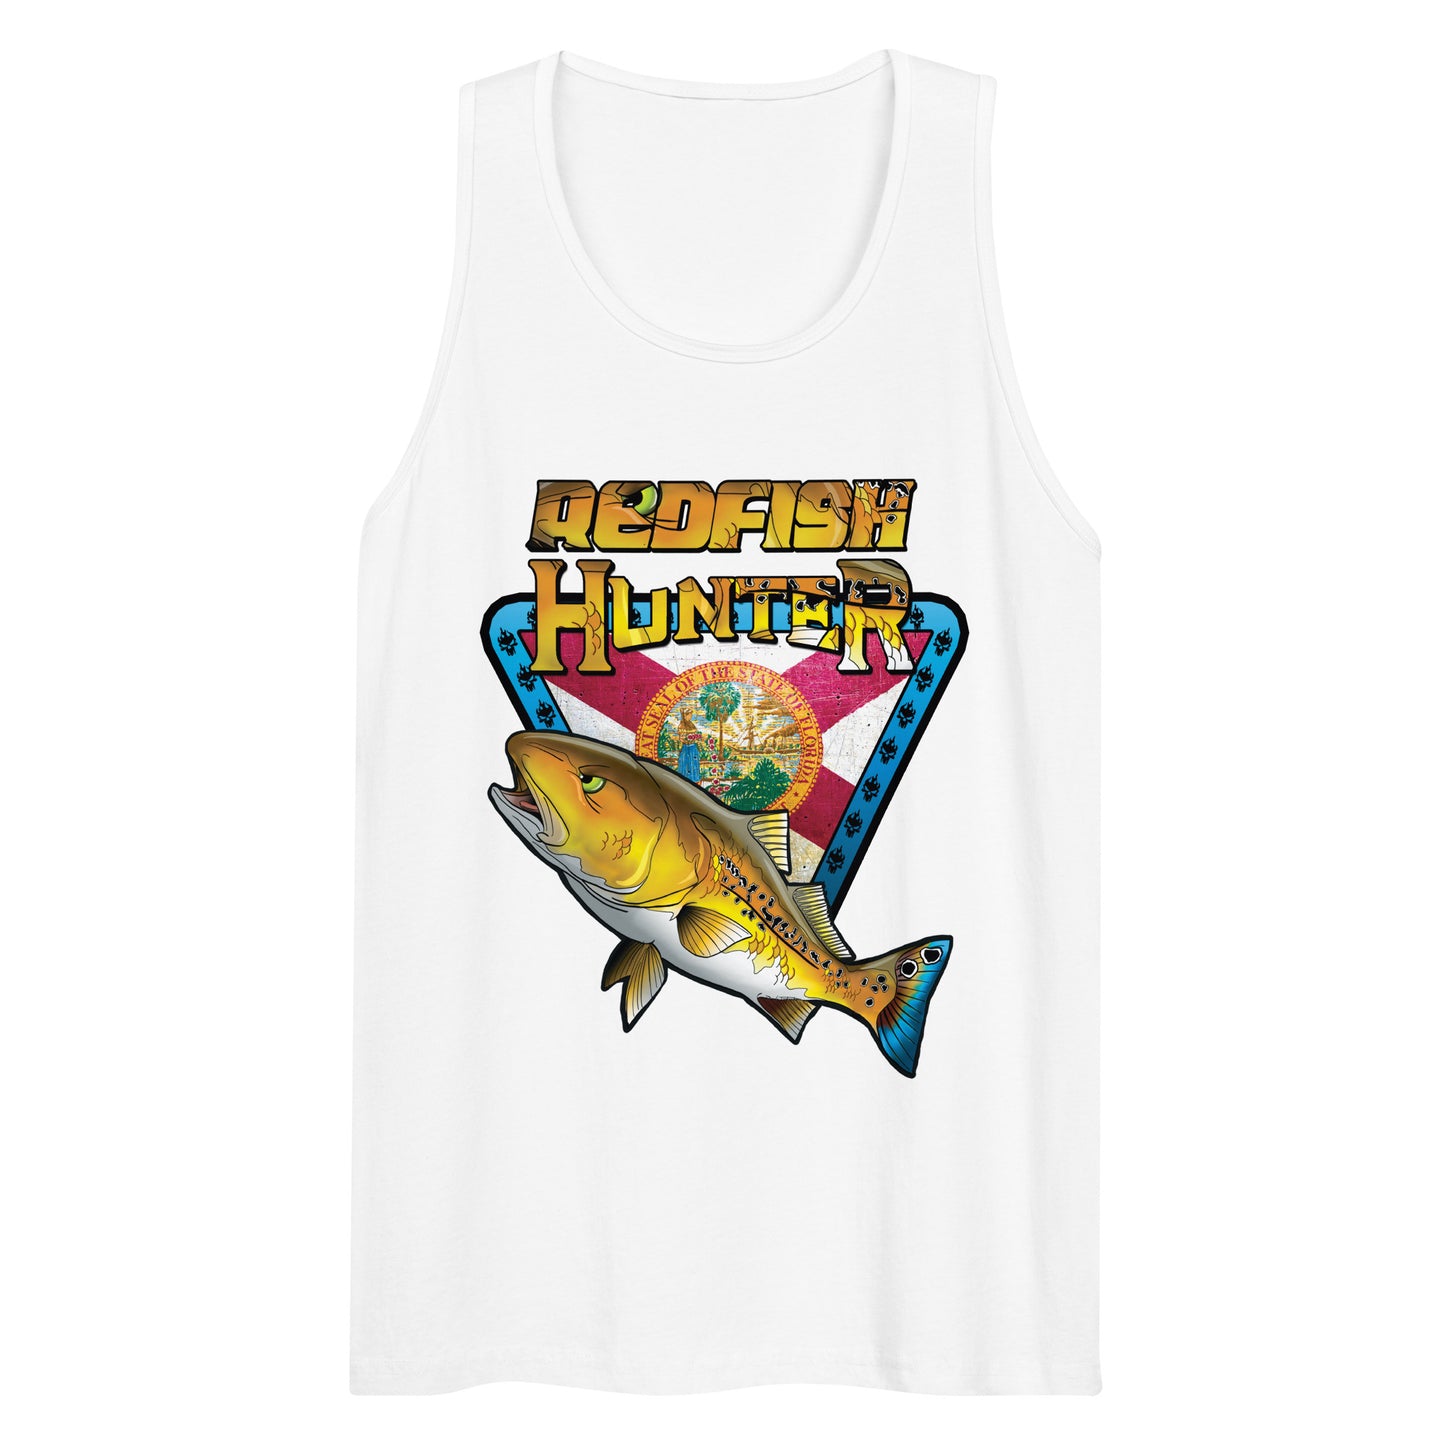 Florida Redfish Hunter Tank Top